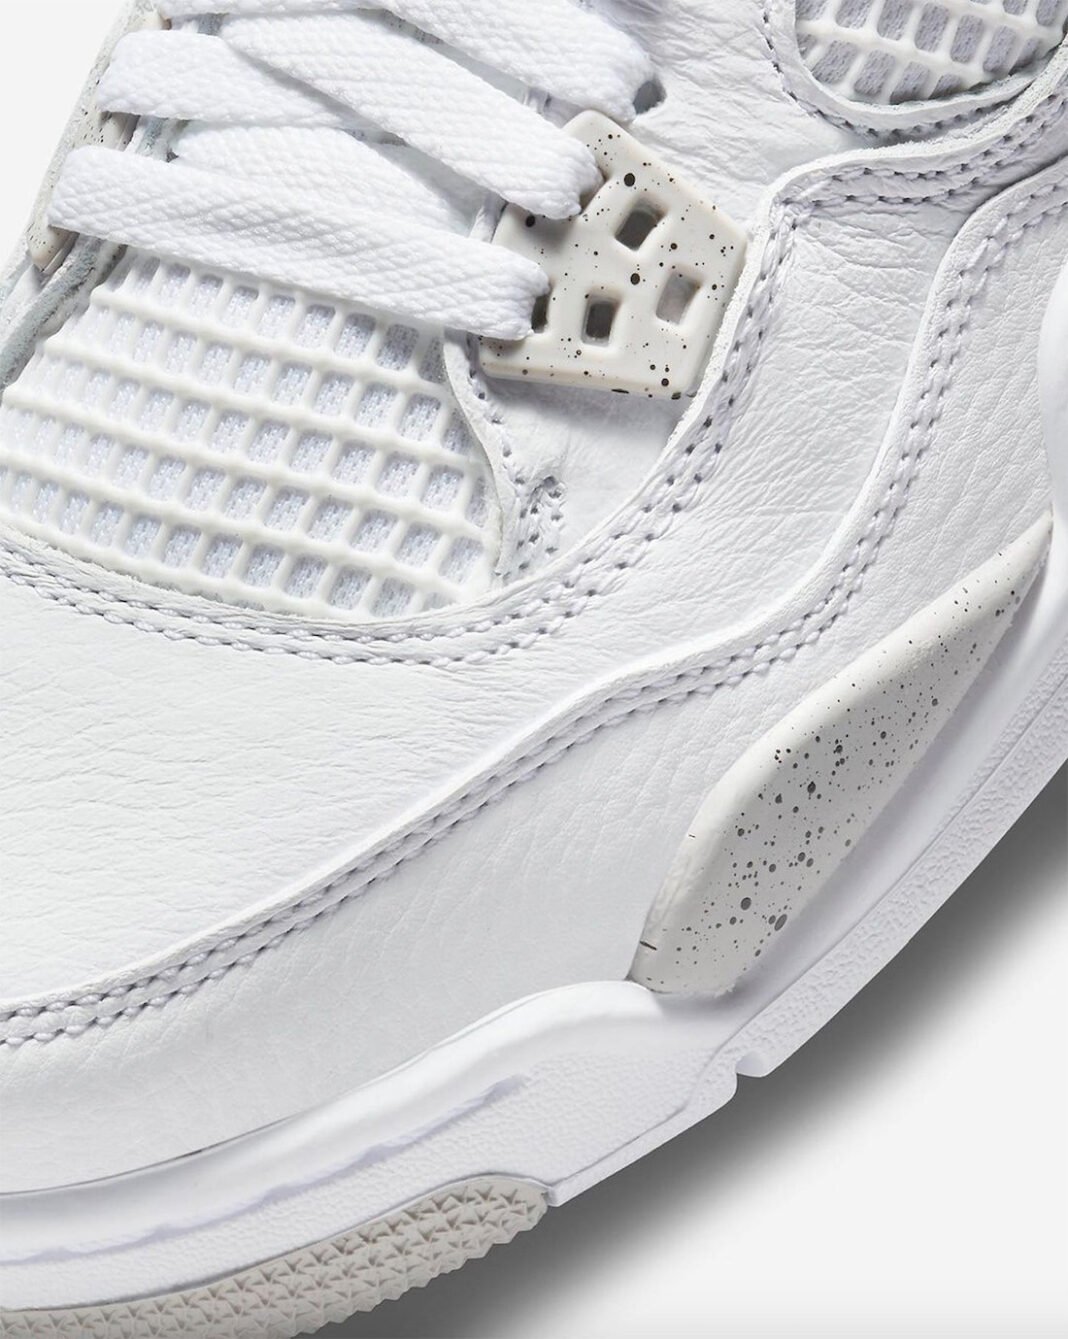 Air Jordan 4 White Oreo CT8527-100 2021 Release Date Info | SneakerFiles